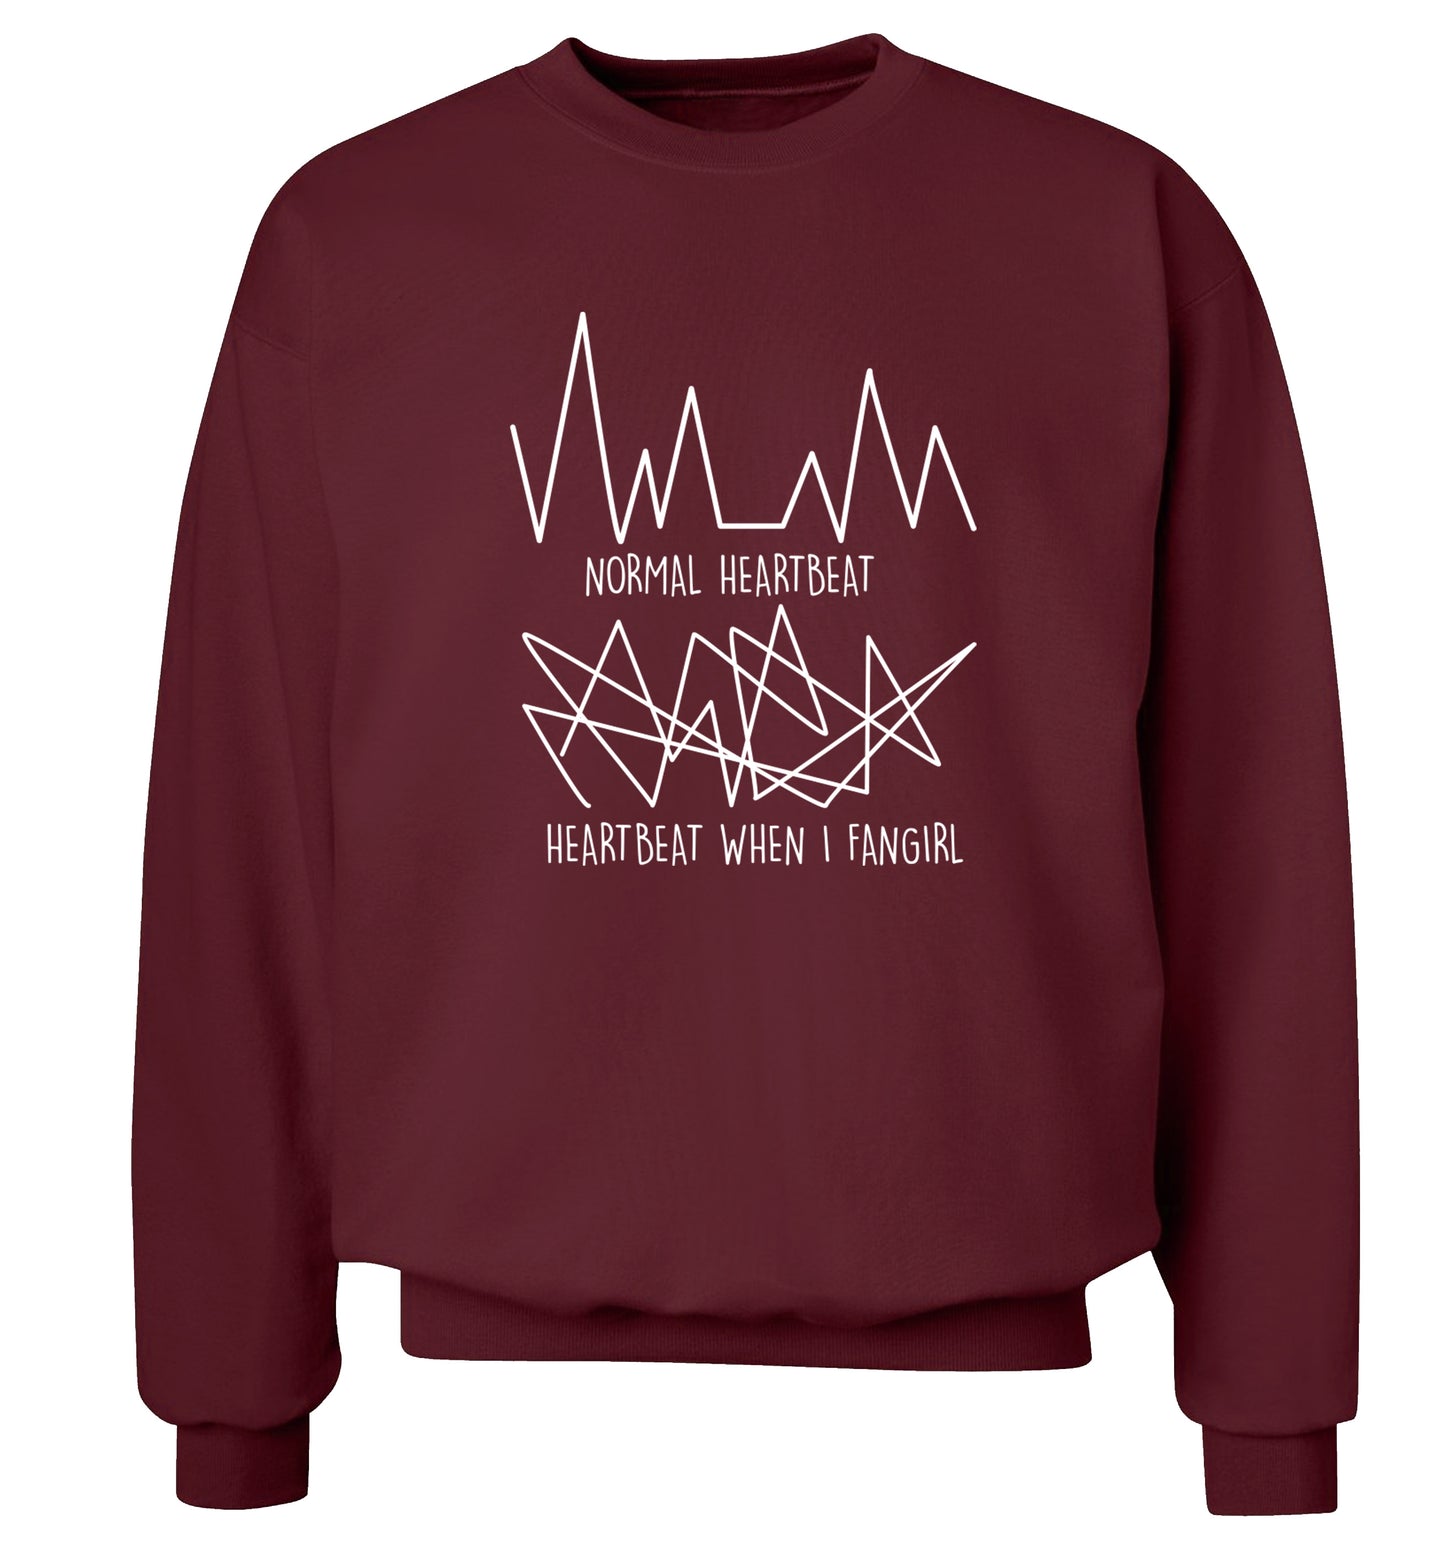 Normal heartbeat heartbeat when I fangirl Adult's unisex maroon Sweater 2XL